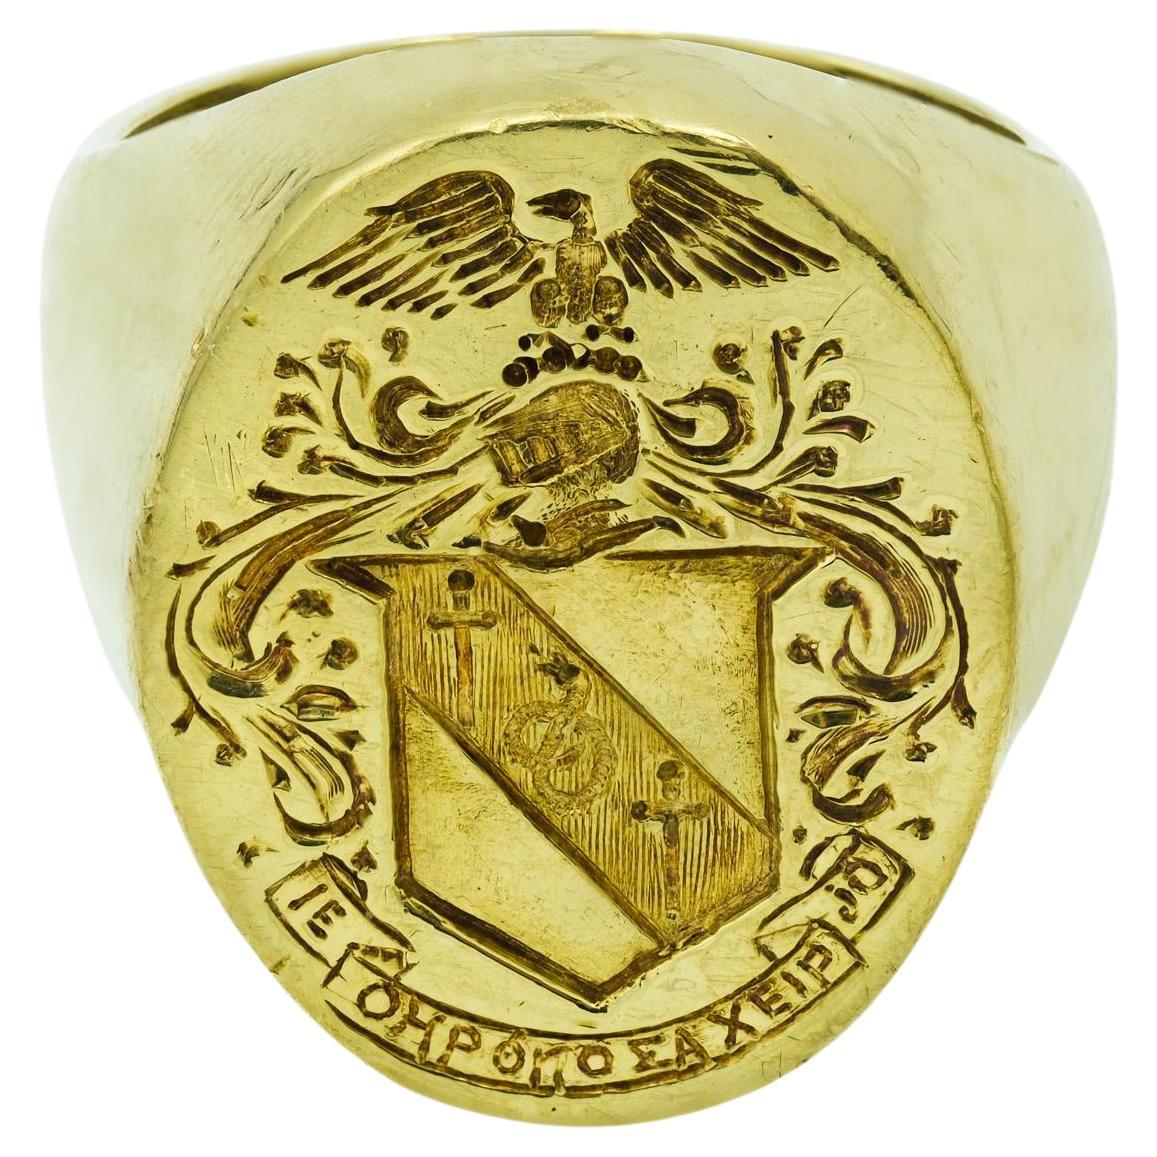 Men's 18 Karat Yellow Gold Heavy Signet Ring w Eagle Crest Sword & Greek Letters